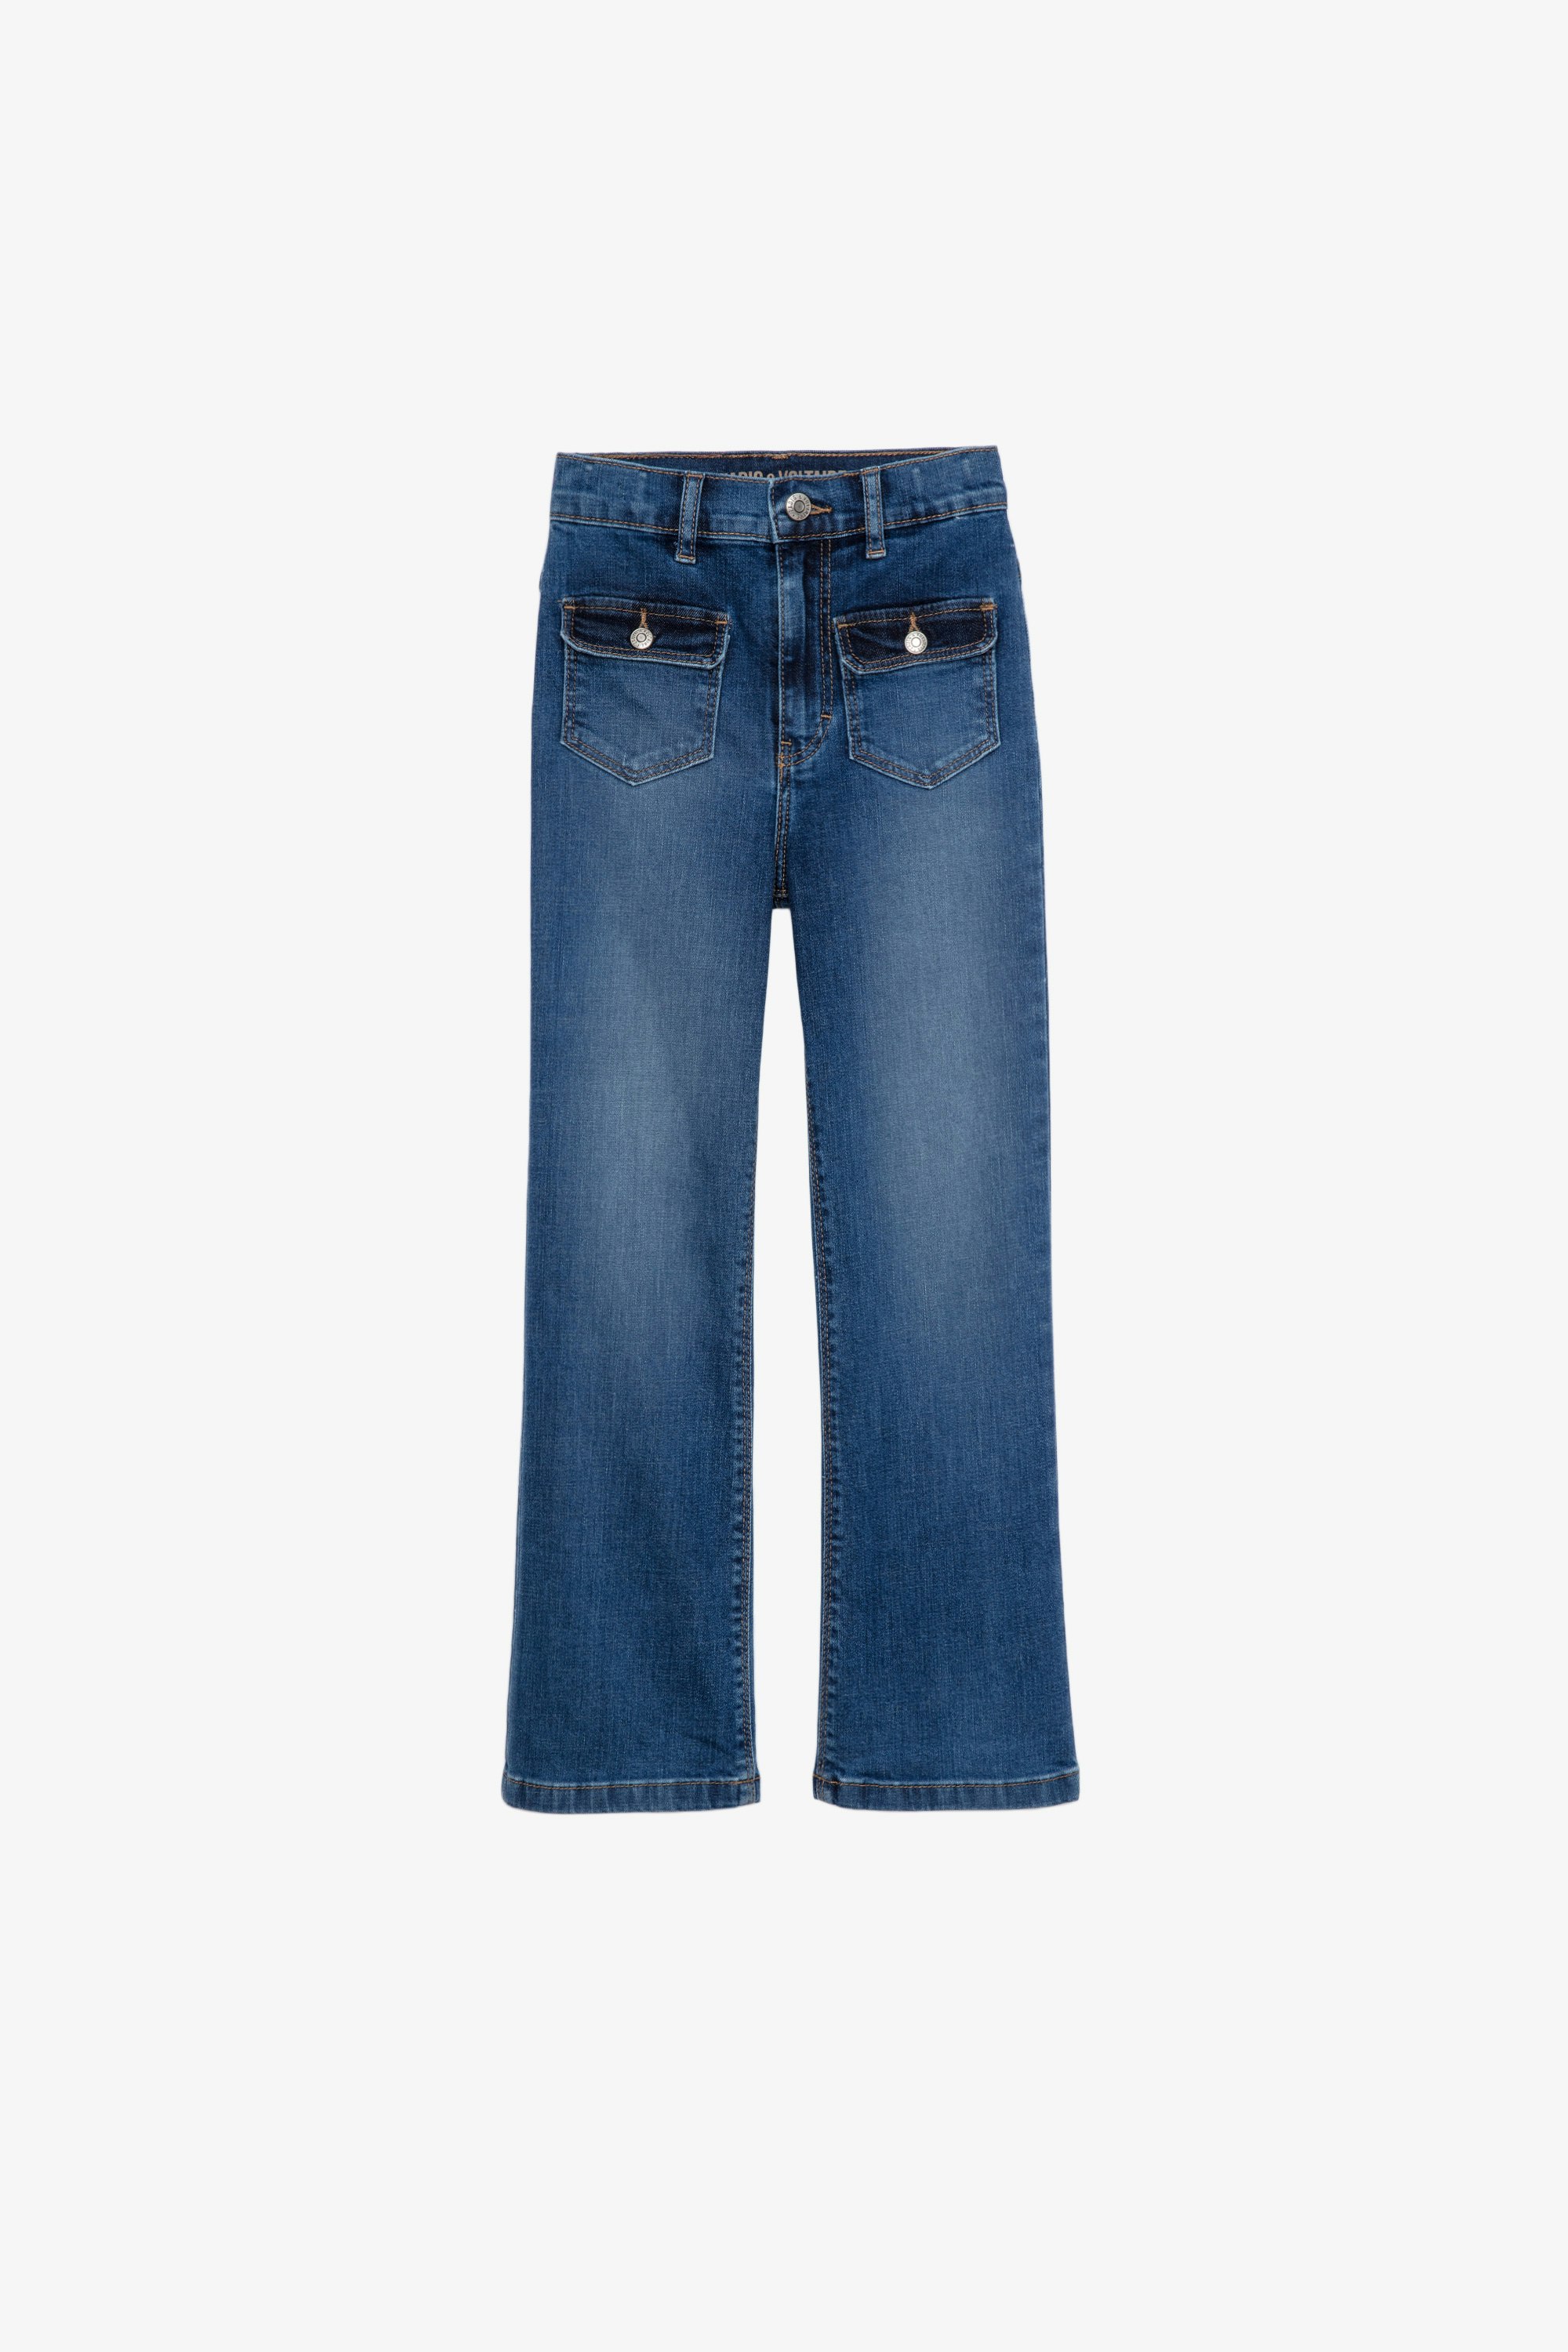 Hippie Kids’ ジーンズ Children’s blue faded denim flared jeans 